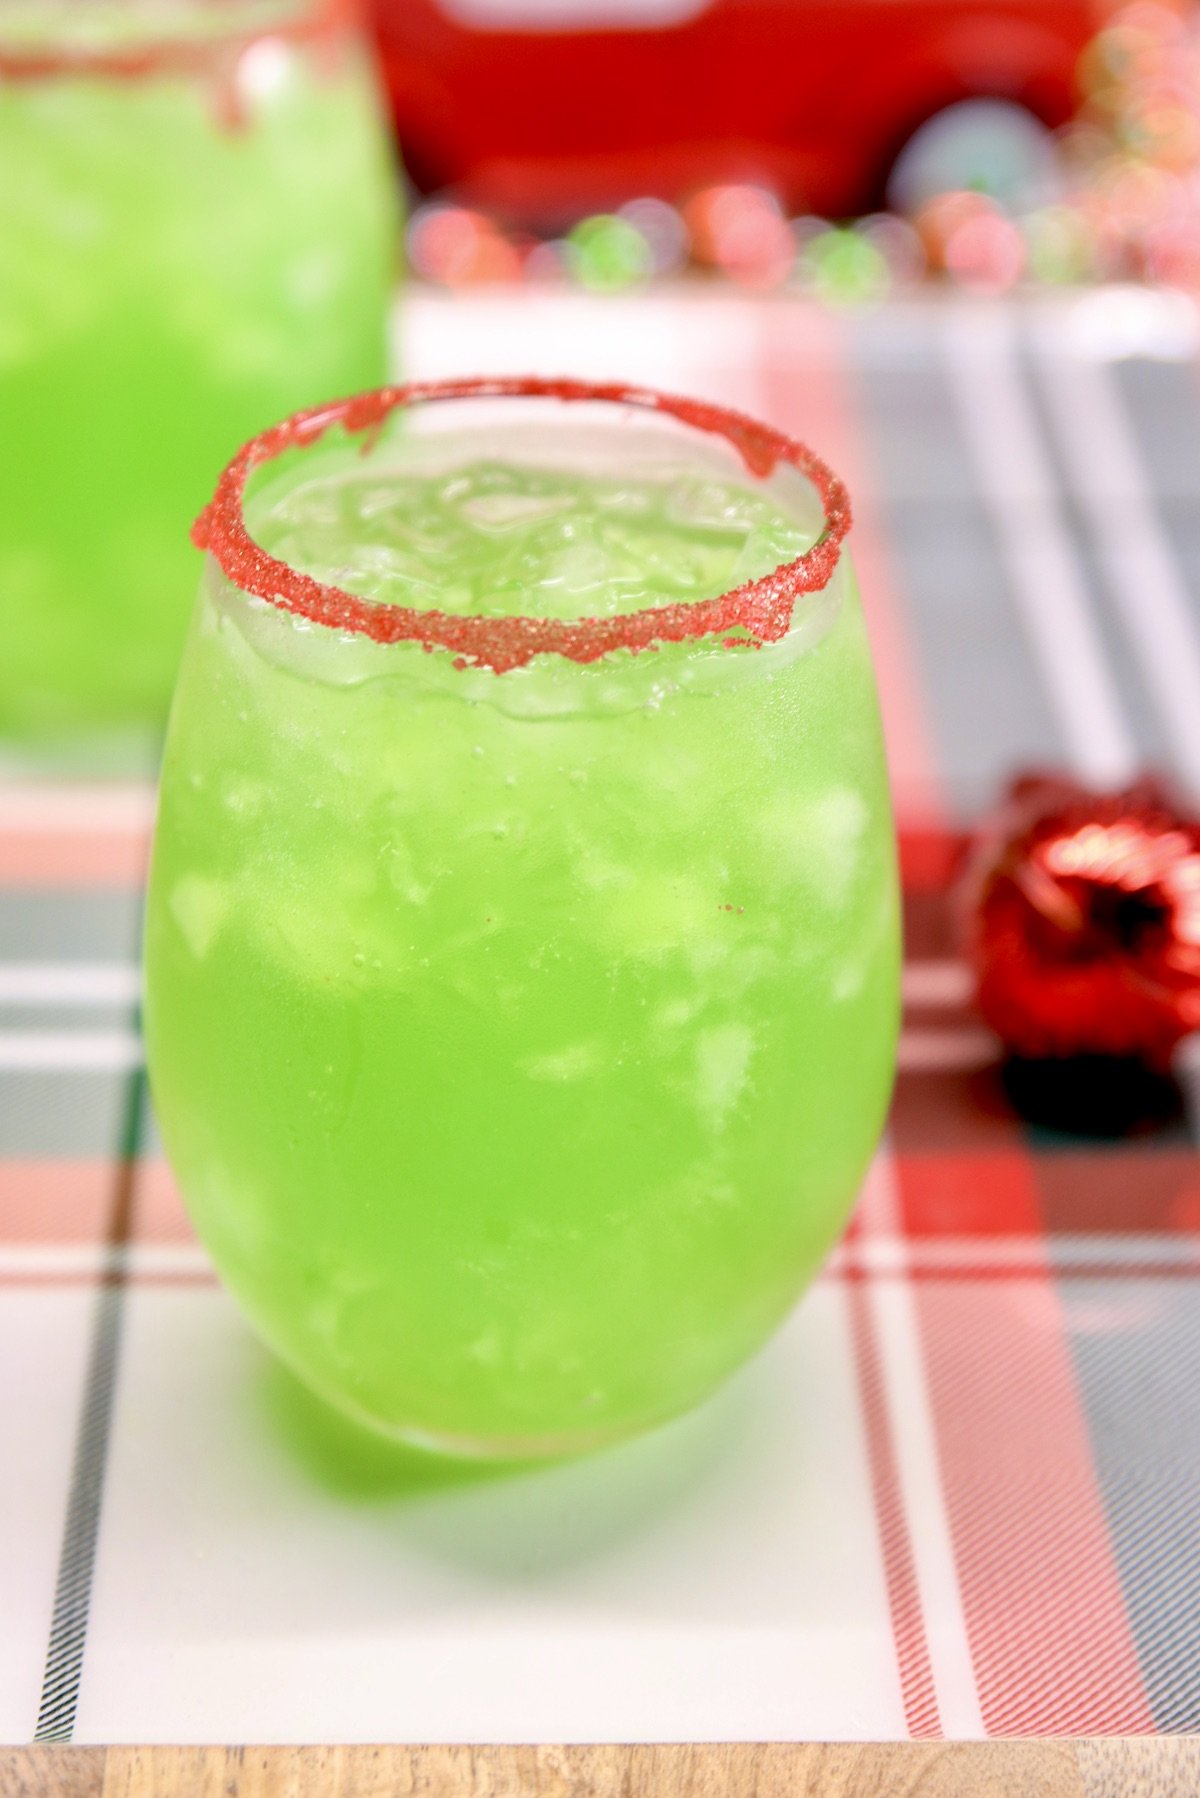 lemon-lime green punch in 2 stemless wine glasses - red sugar rim